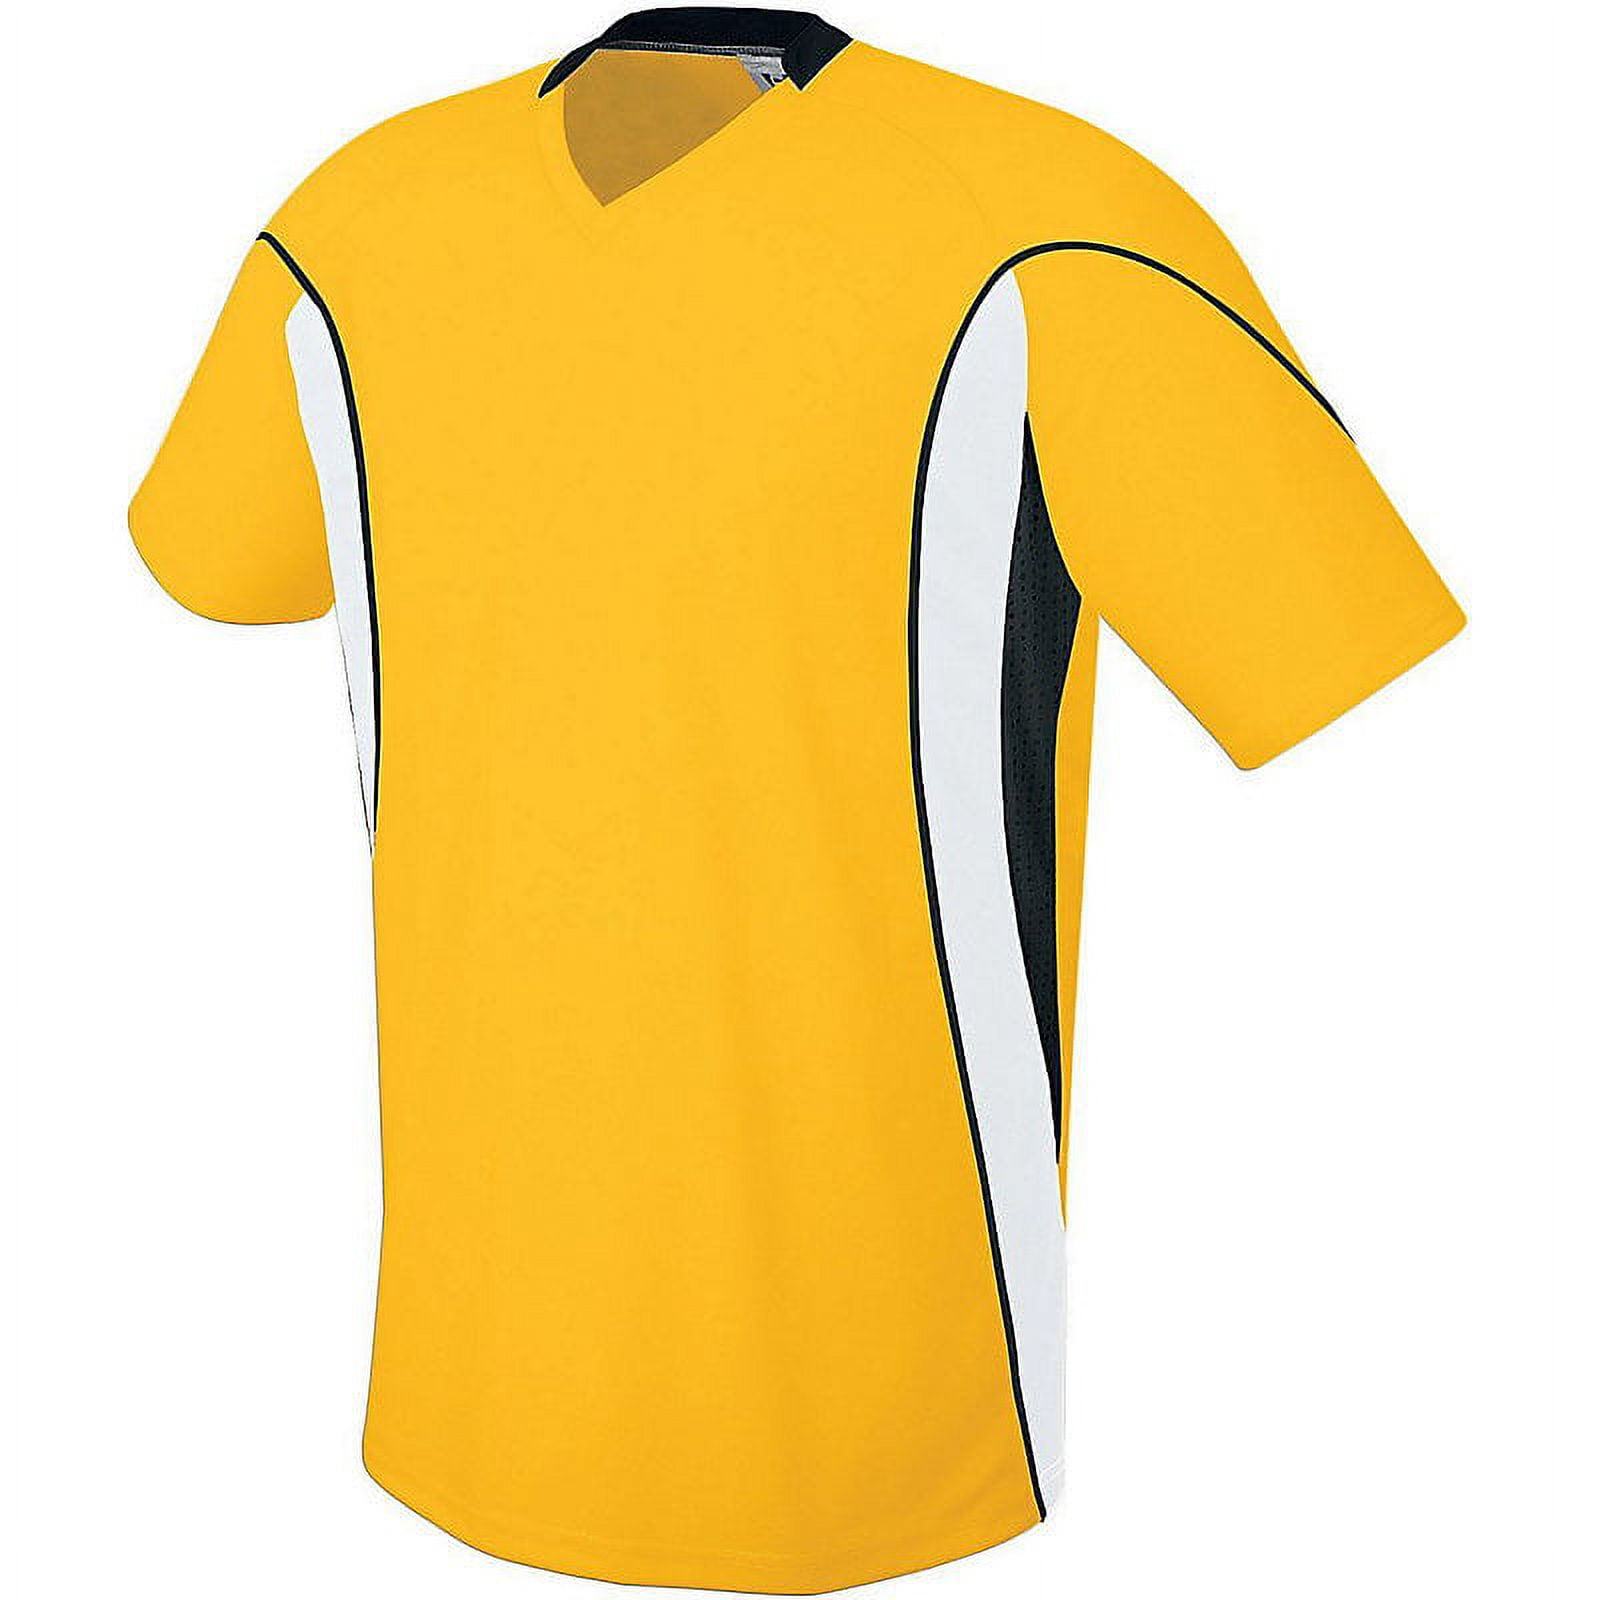 Find More Soccer Jerseys Information about custom mens mesh plain